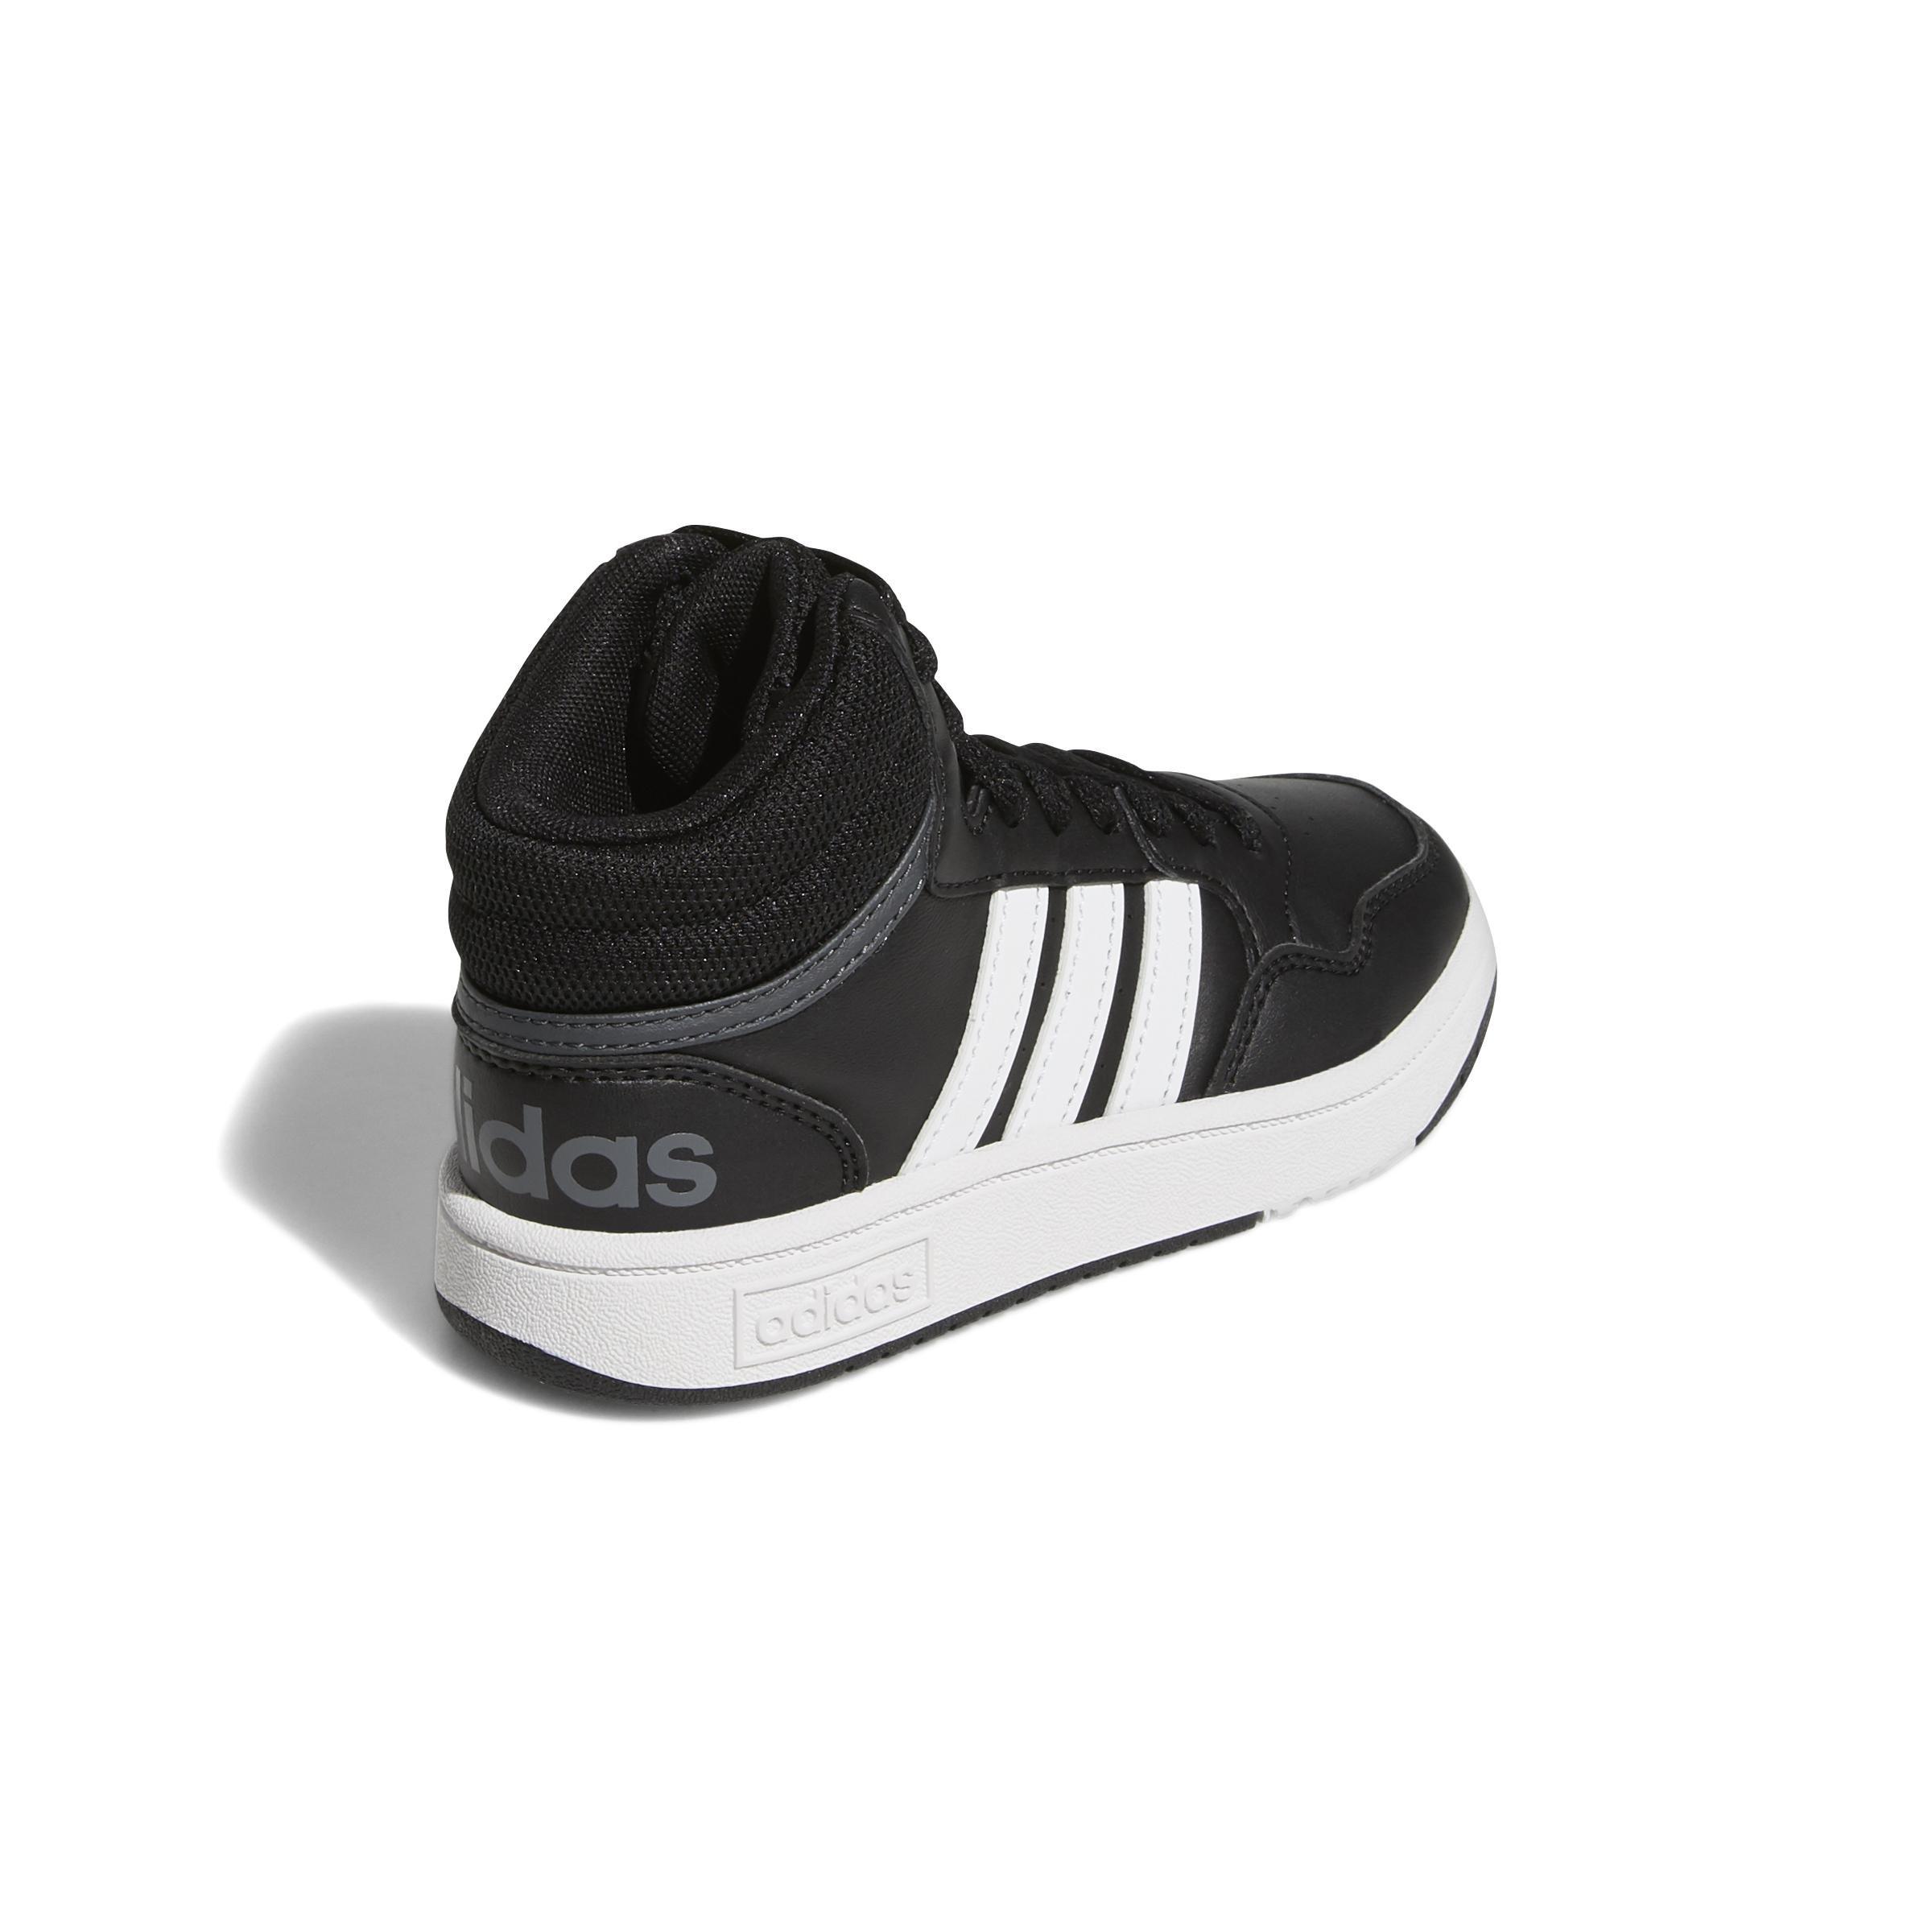 adidas - Hoops Mid Shoes core black Unisex Kids